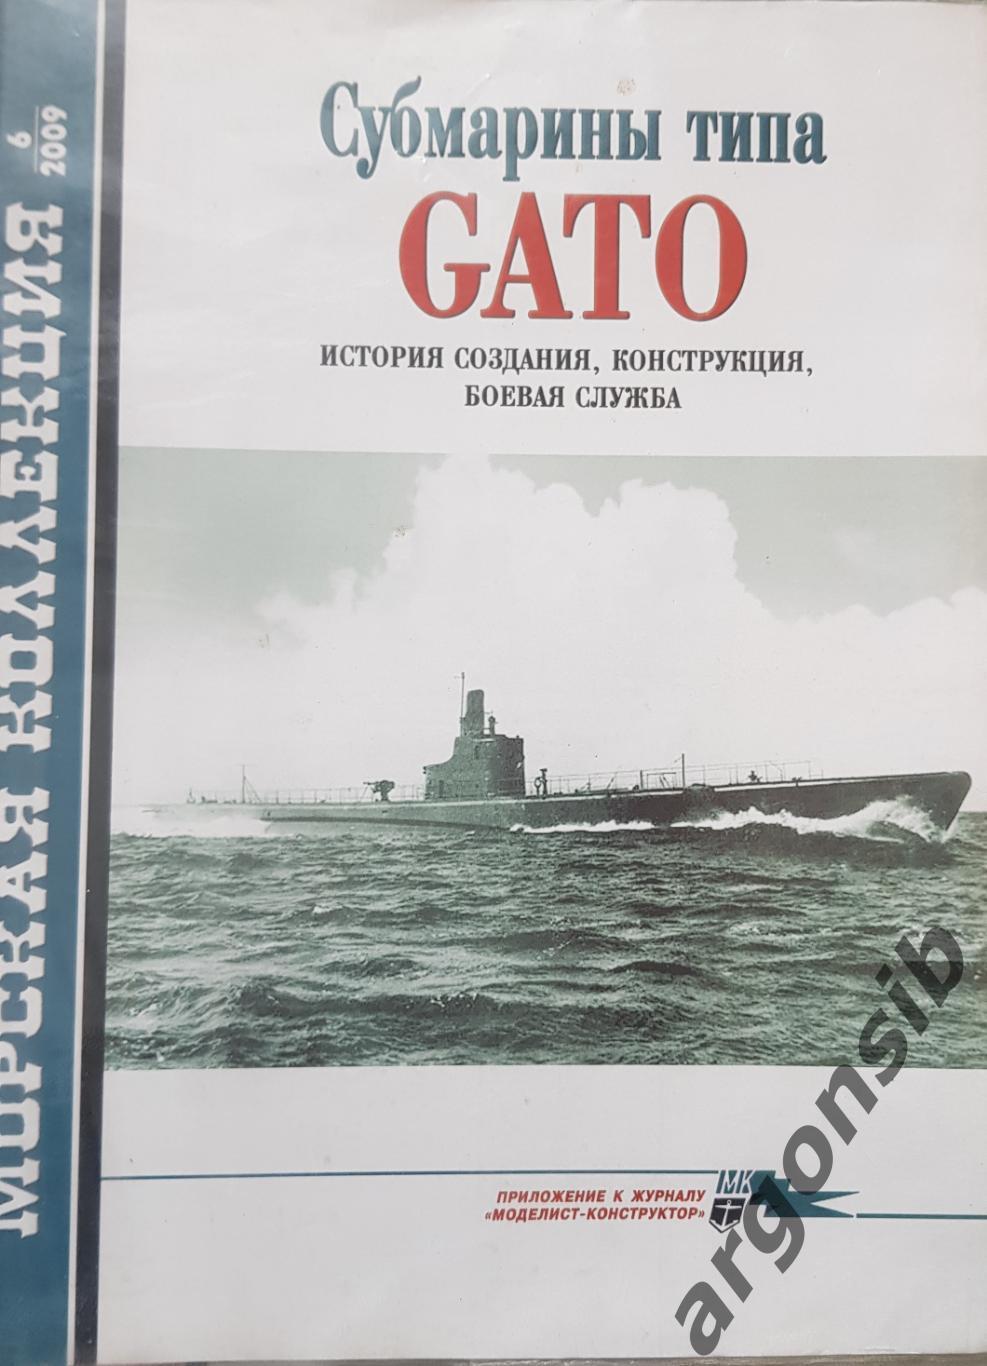 Морская коллекция №6-2009,журнал,Субмарины типа GATO